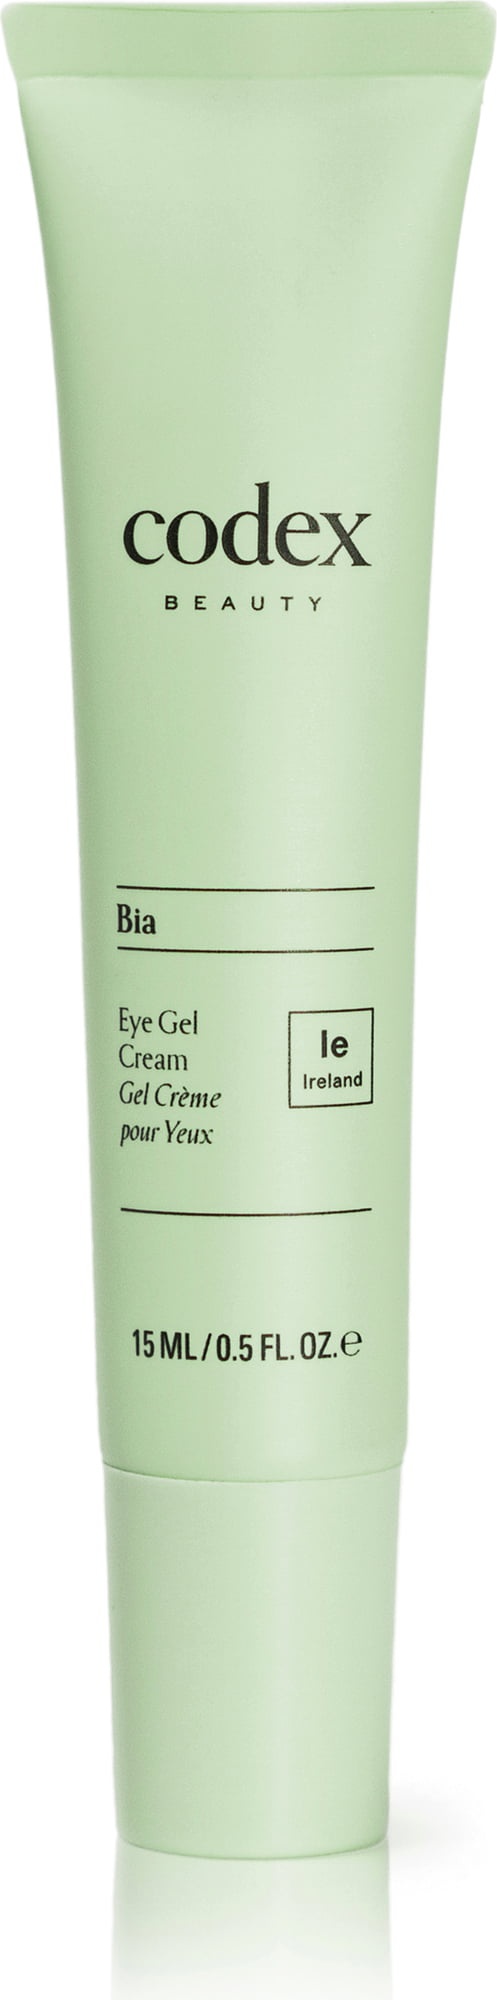 Codex Beauty Bia Eye Gel Cream